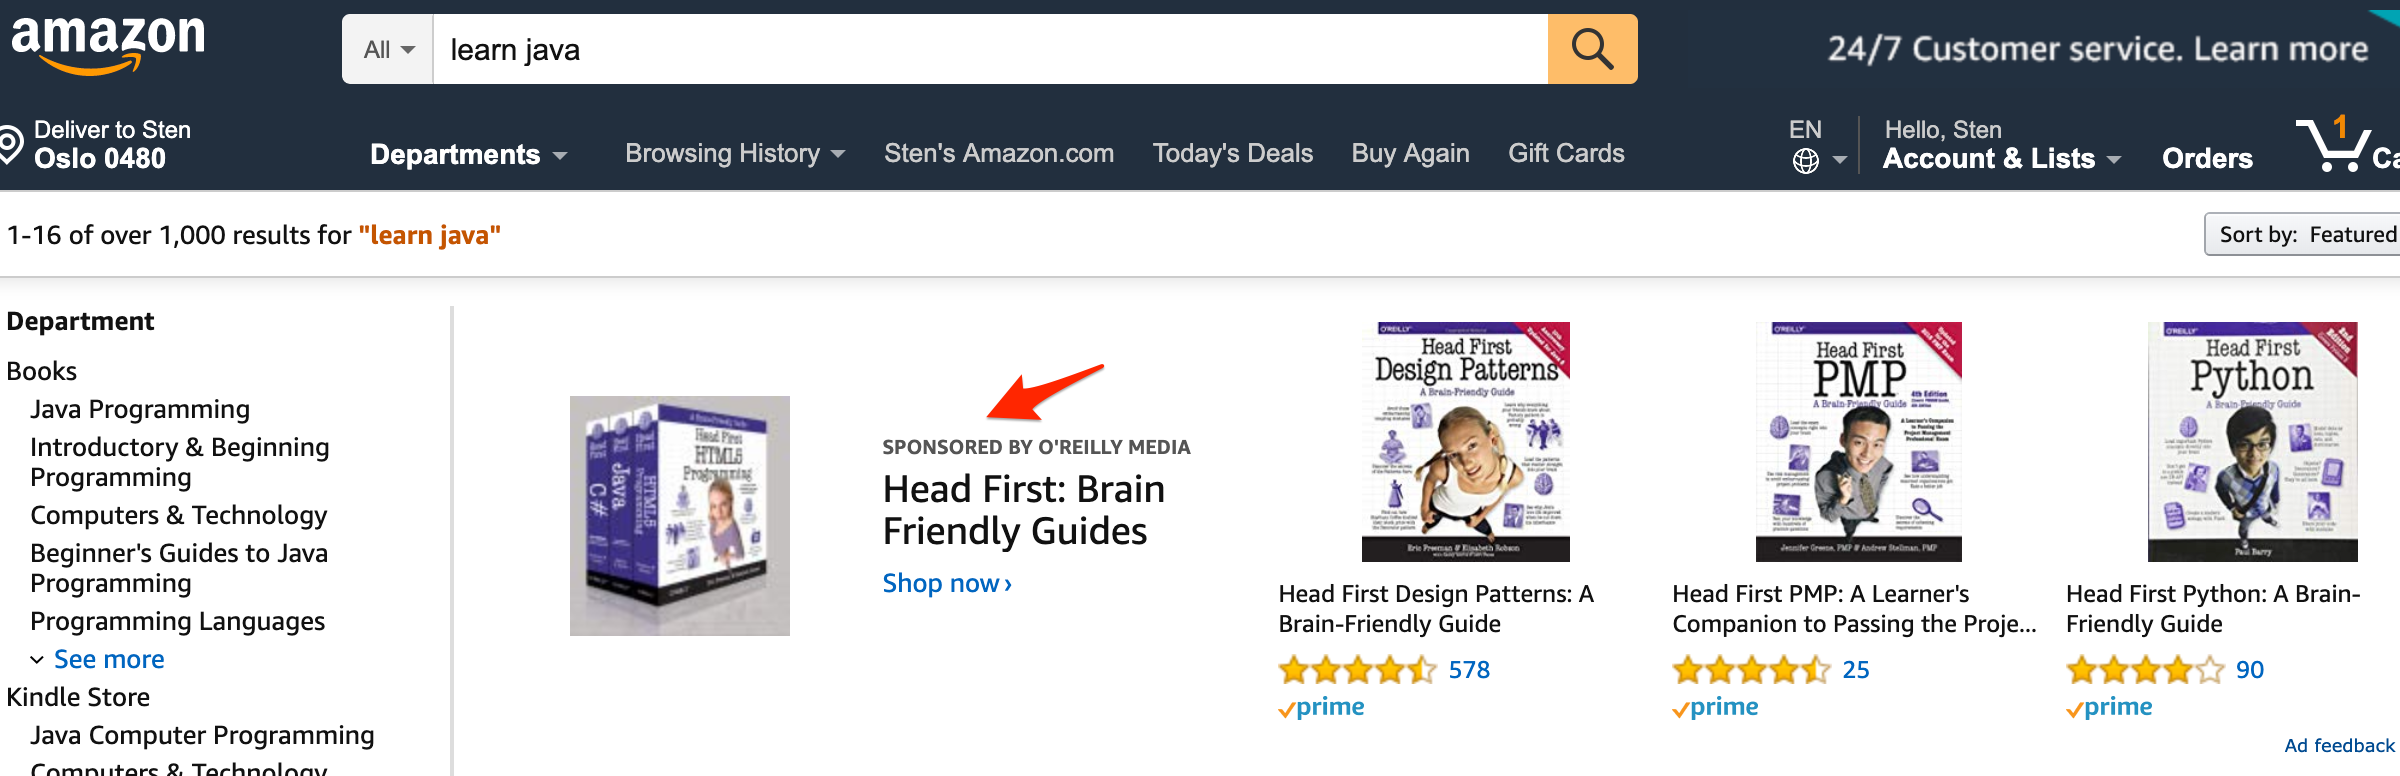 Amazon Sponsored Ad